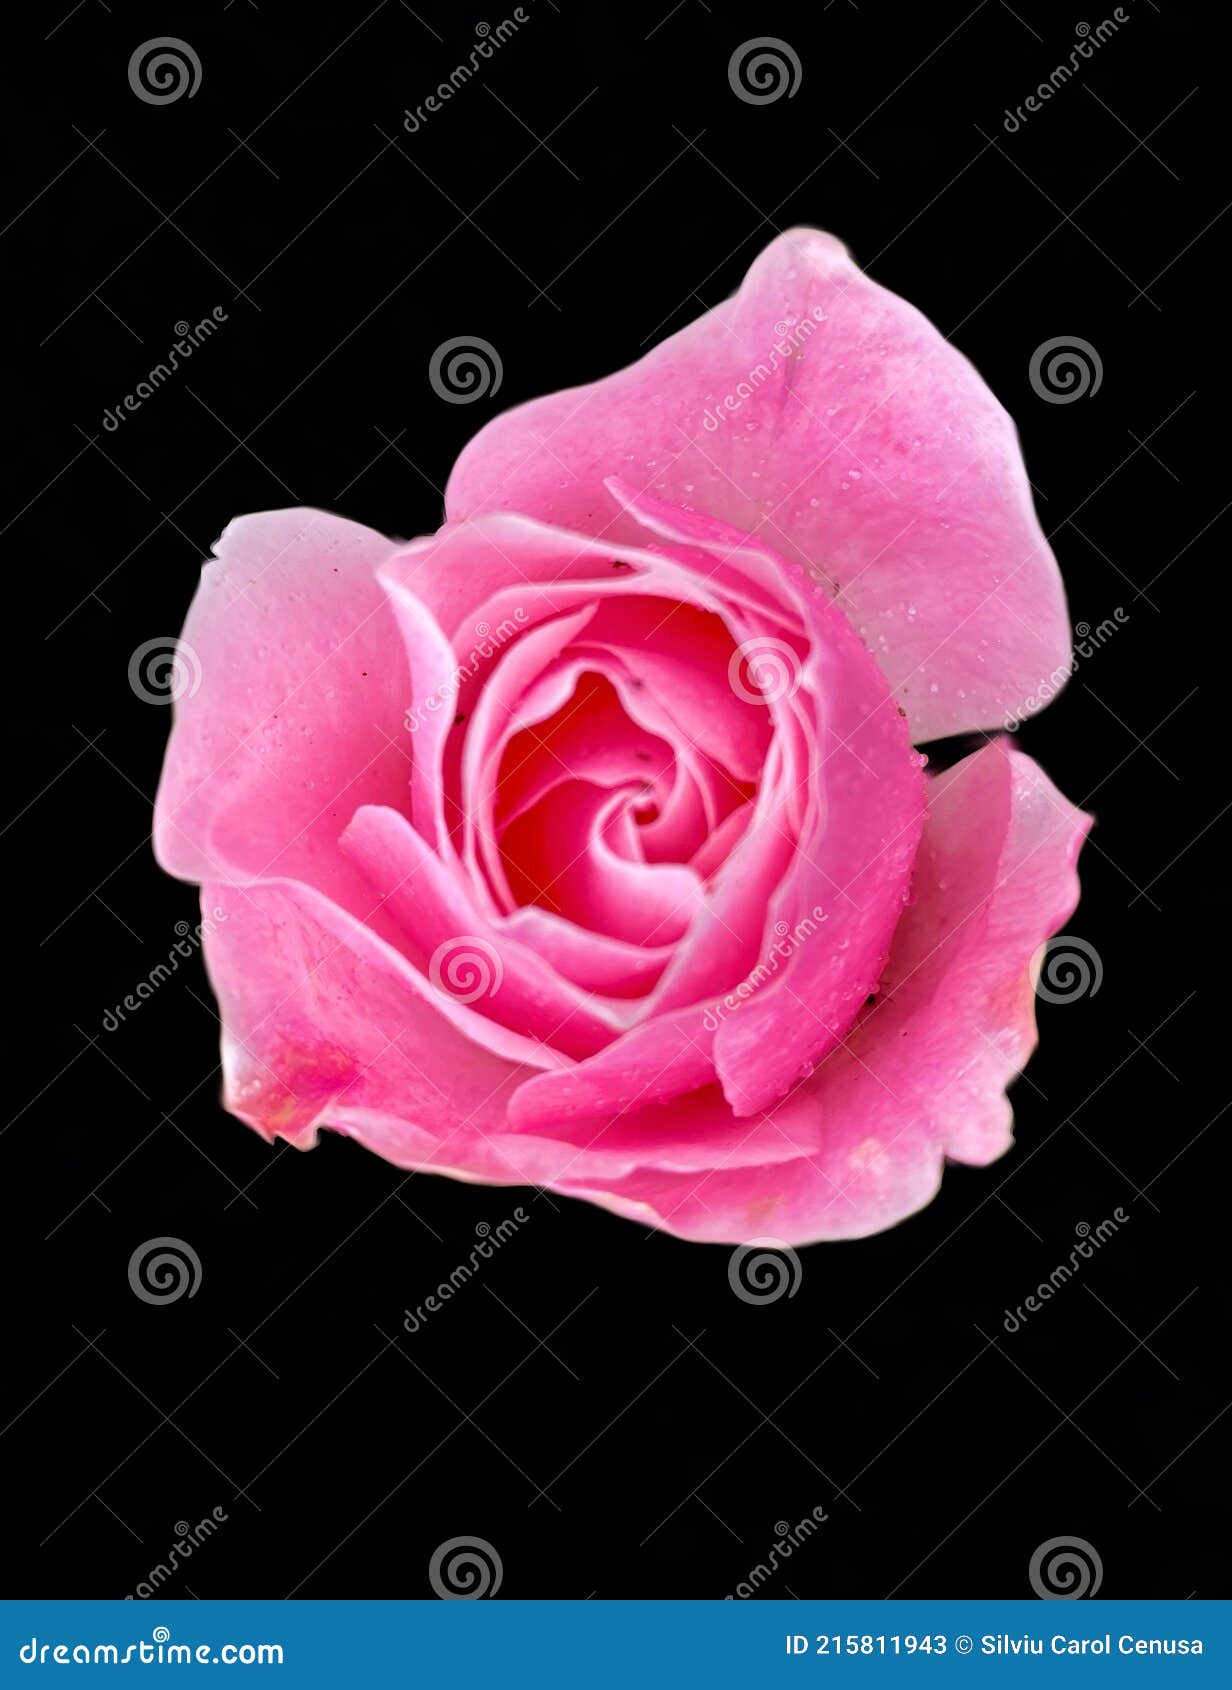 Pink Rose on Black Background Stock Image - Image of romance, nubes